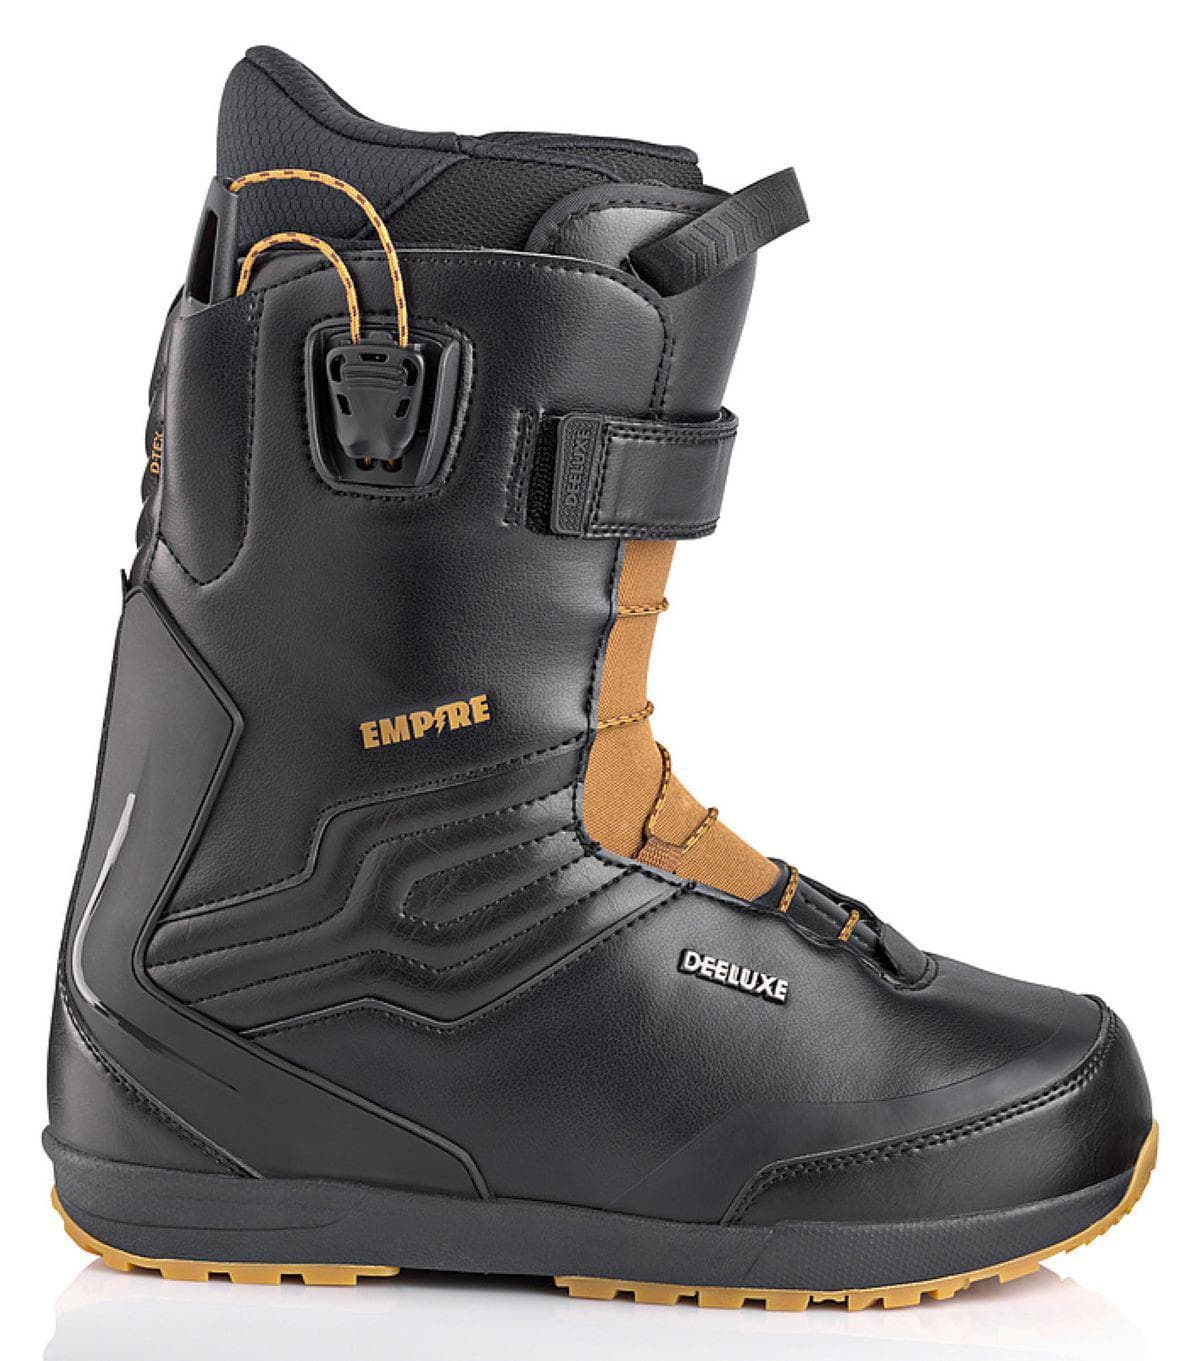 Deeluxe Empire TF Snowboard Boots 2021